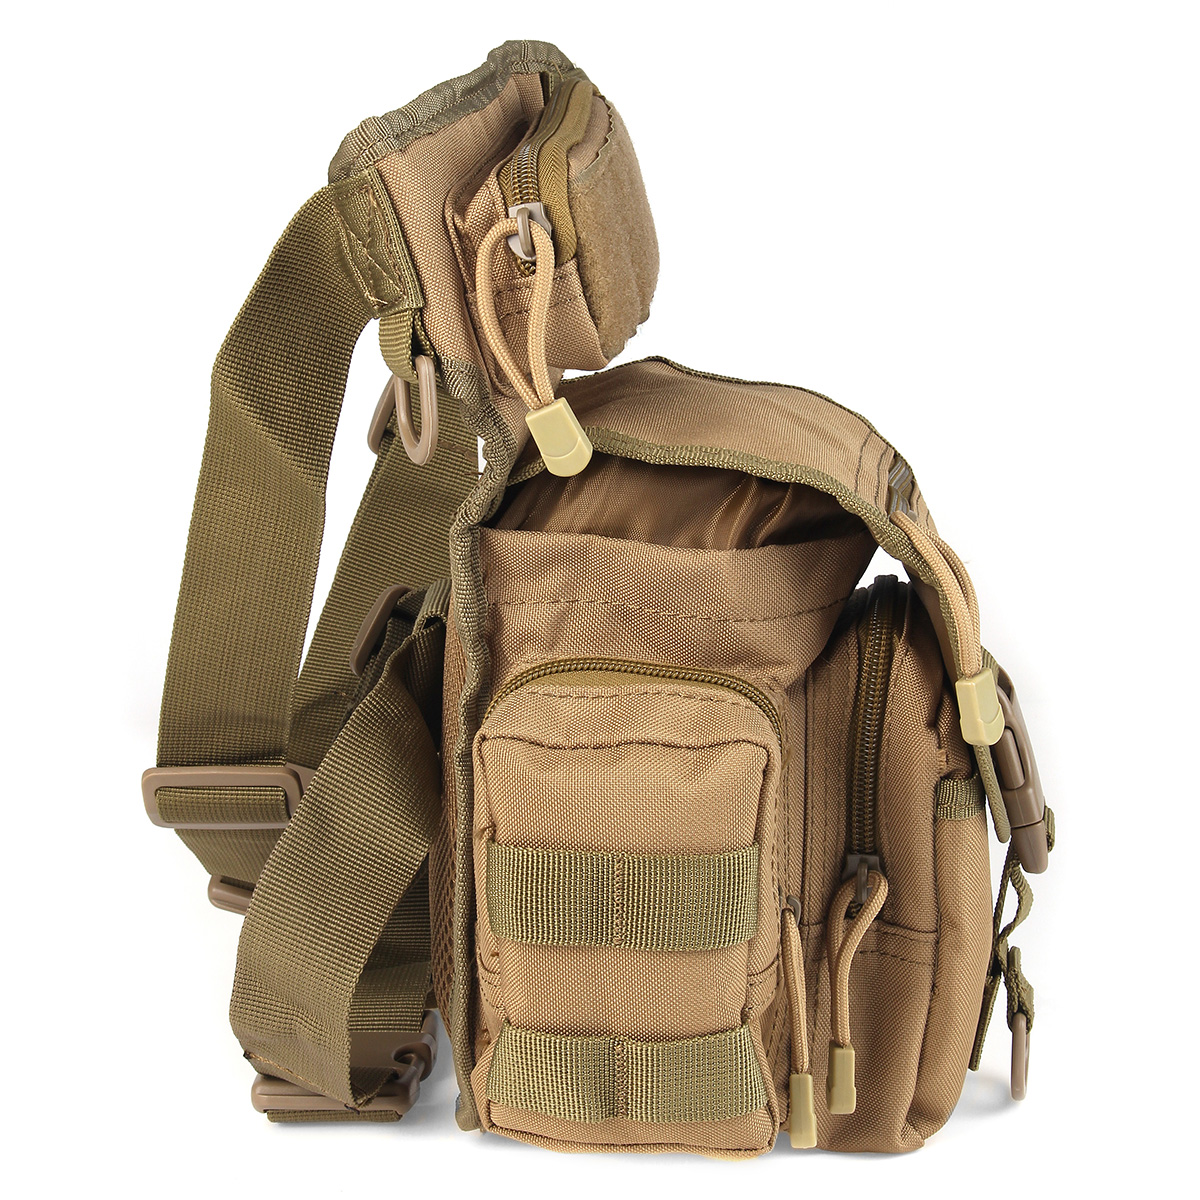 Nylon-Tactical-Waist-Bag-Military-Belt-Buckle-Pouches-Storage-Bag-Leg-Bag-Outdoor-Hunting-Climbing-1763612-5